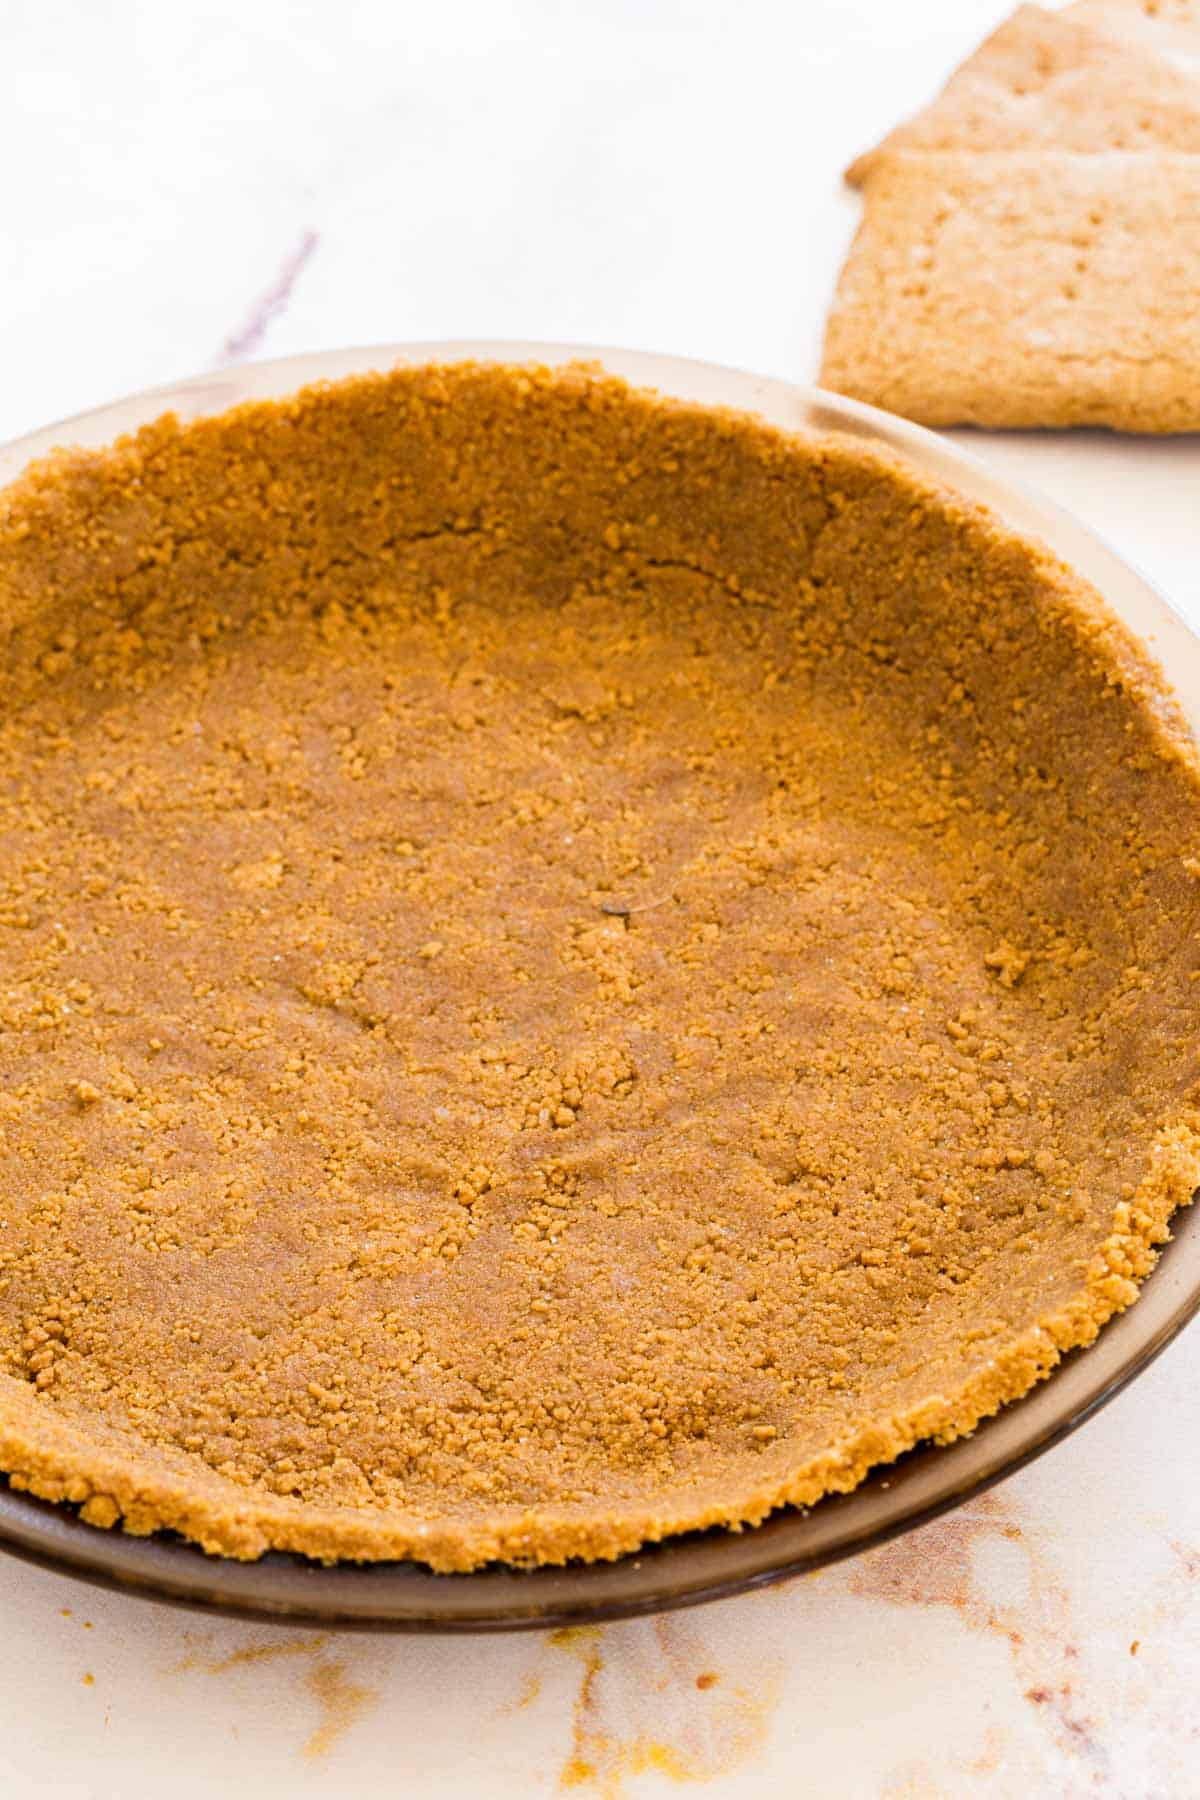 Gluten-free graham cracker crust pressed into a metal pie plate.